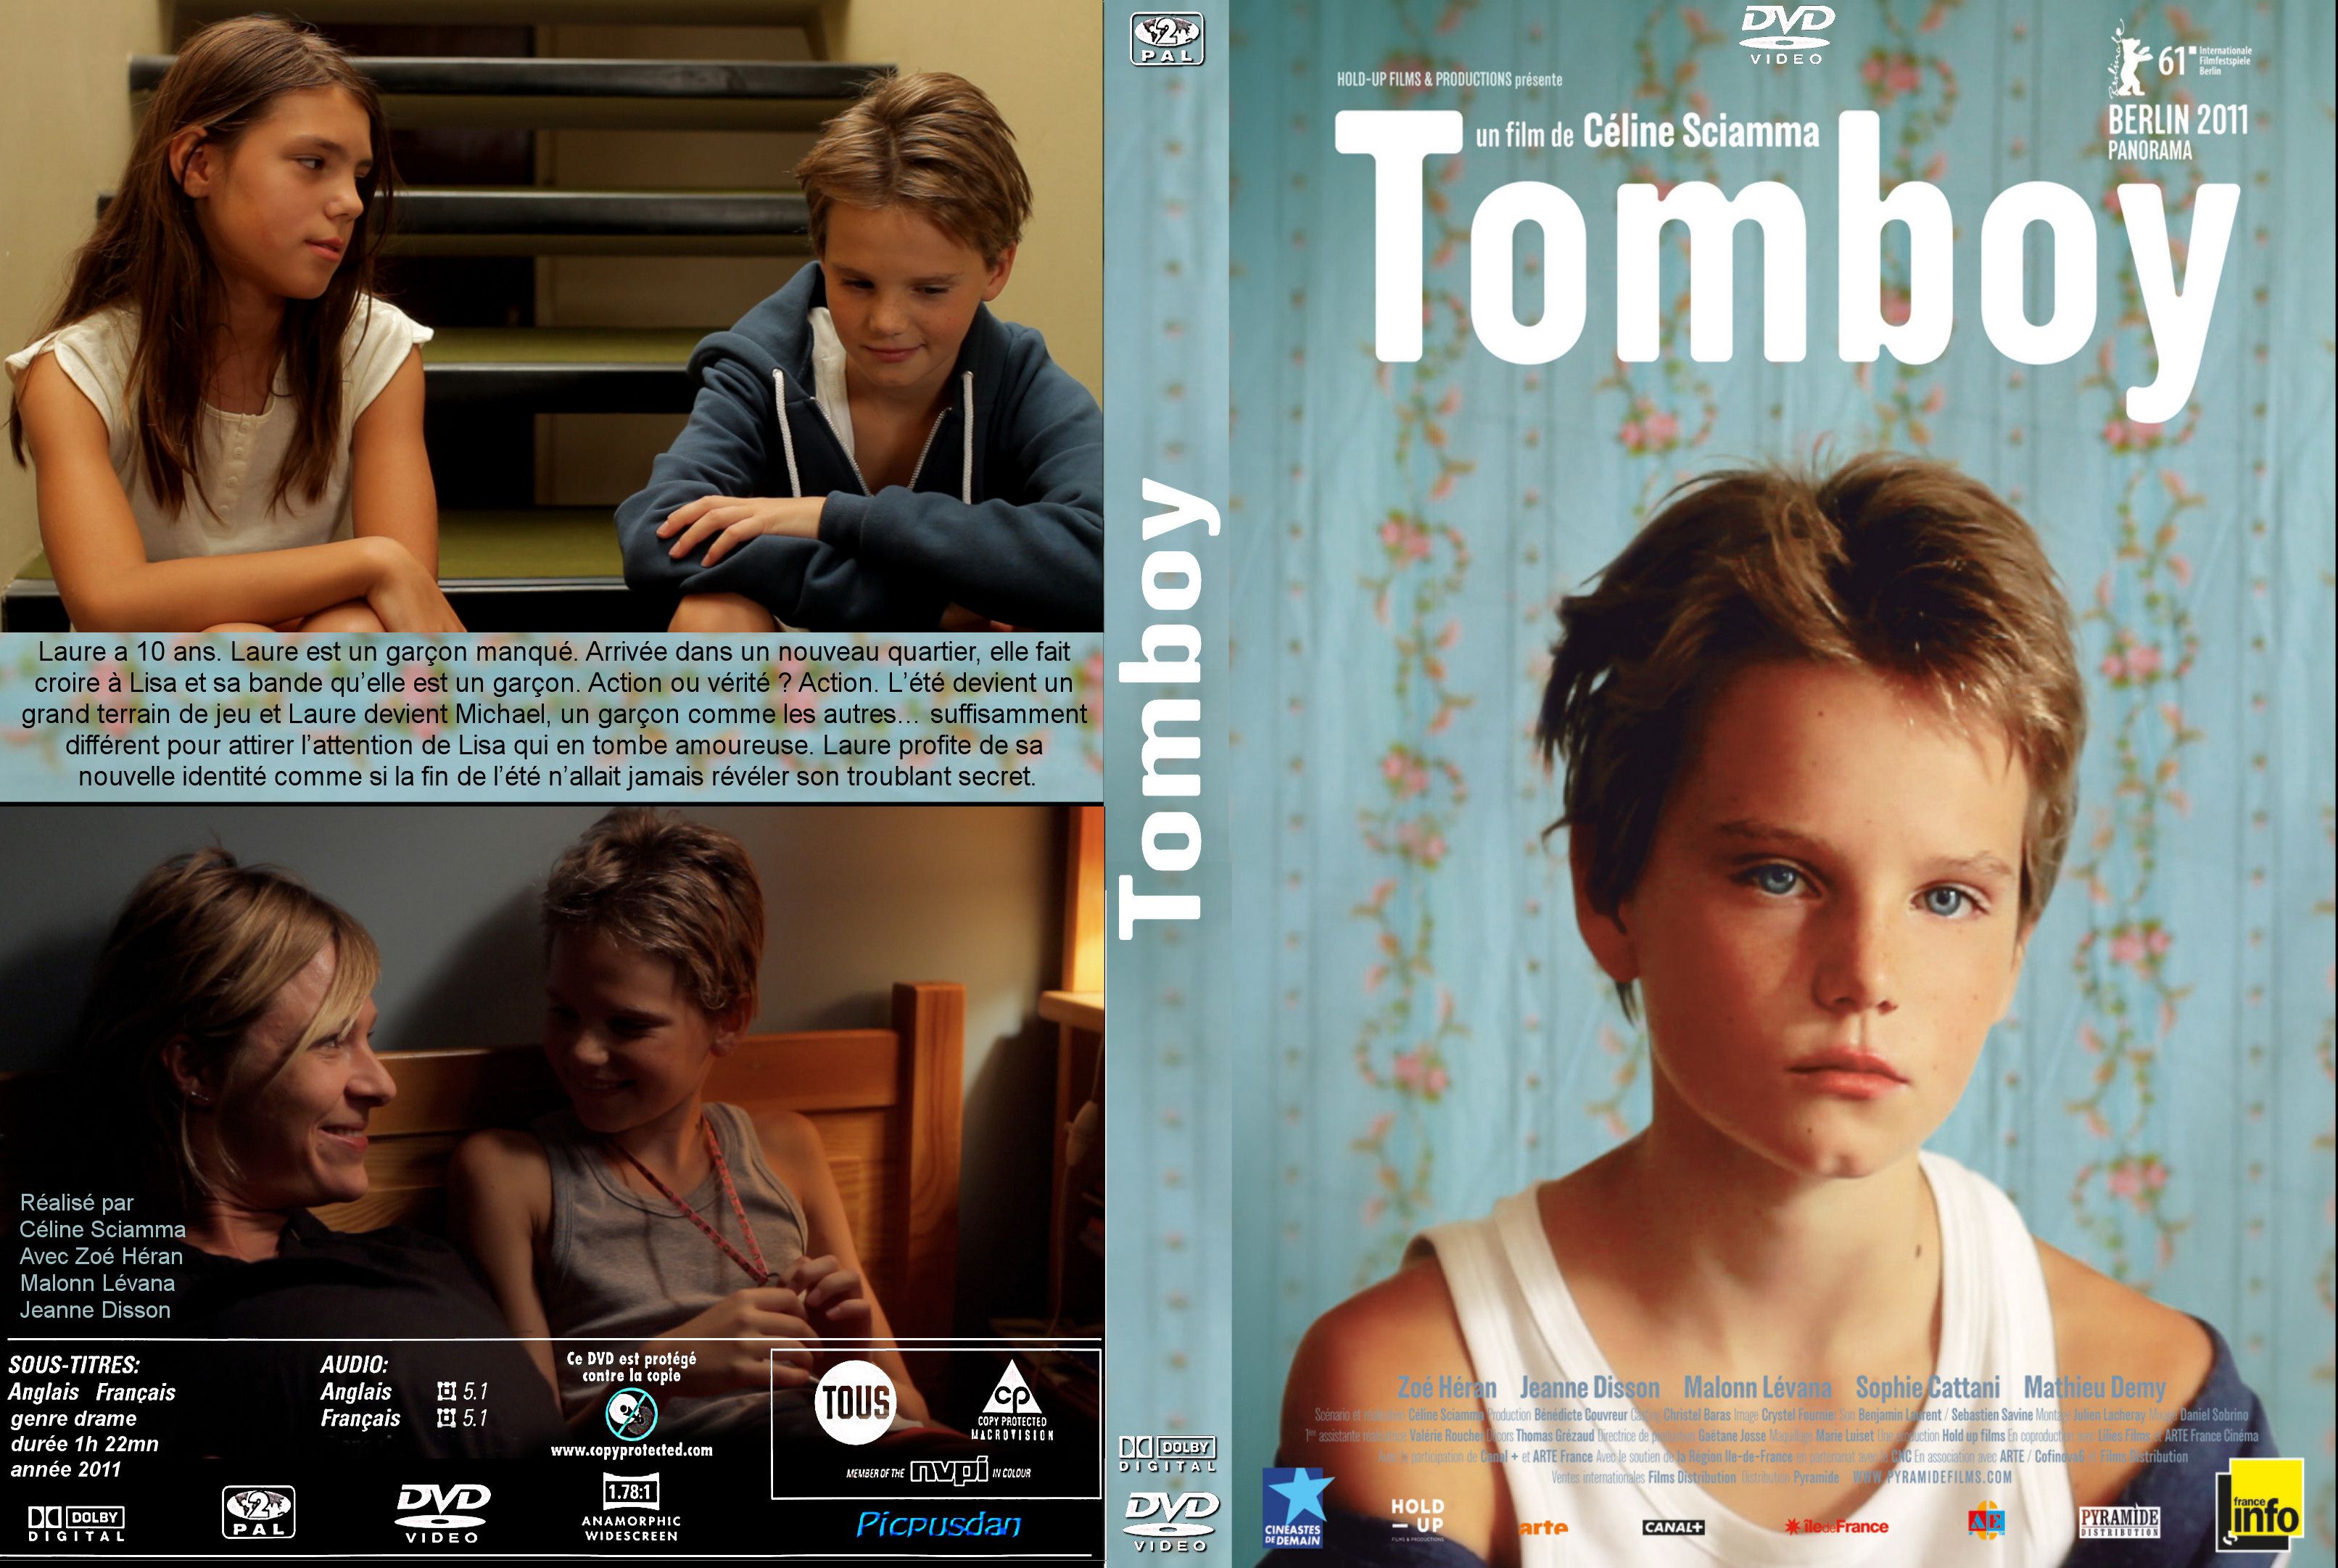 Jaquette DVD Tomboy (2011) custom